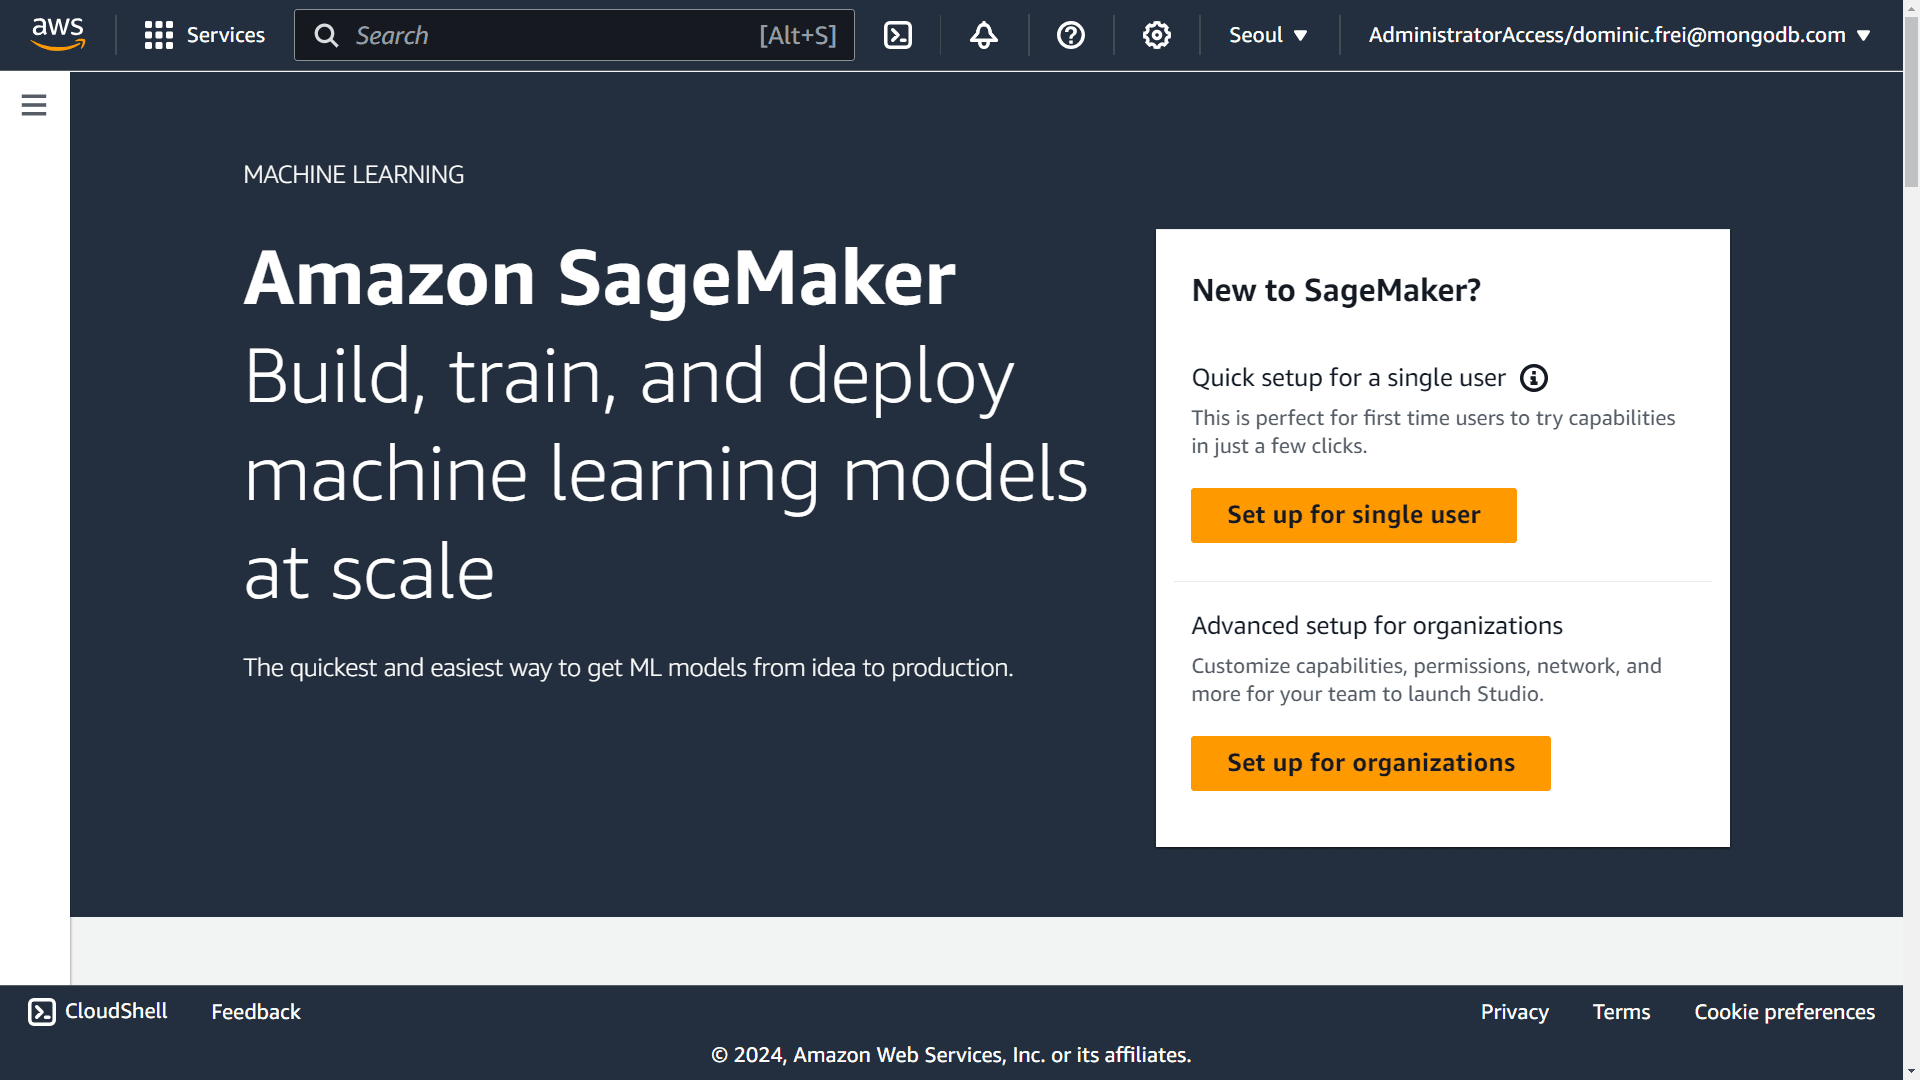 Amazon SageMaker landing page